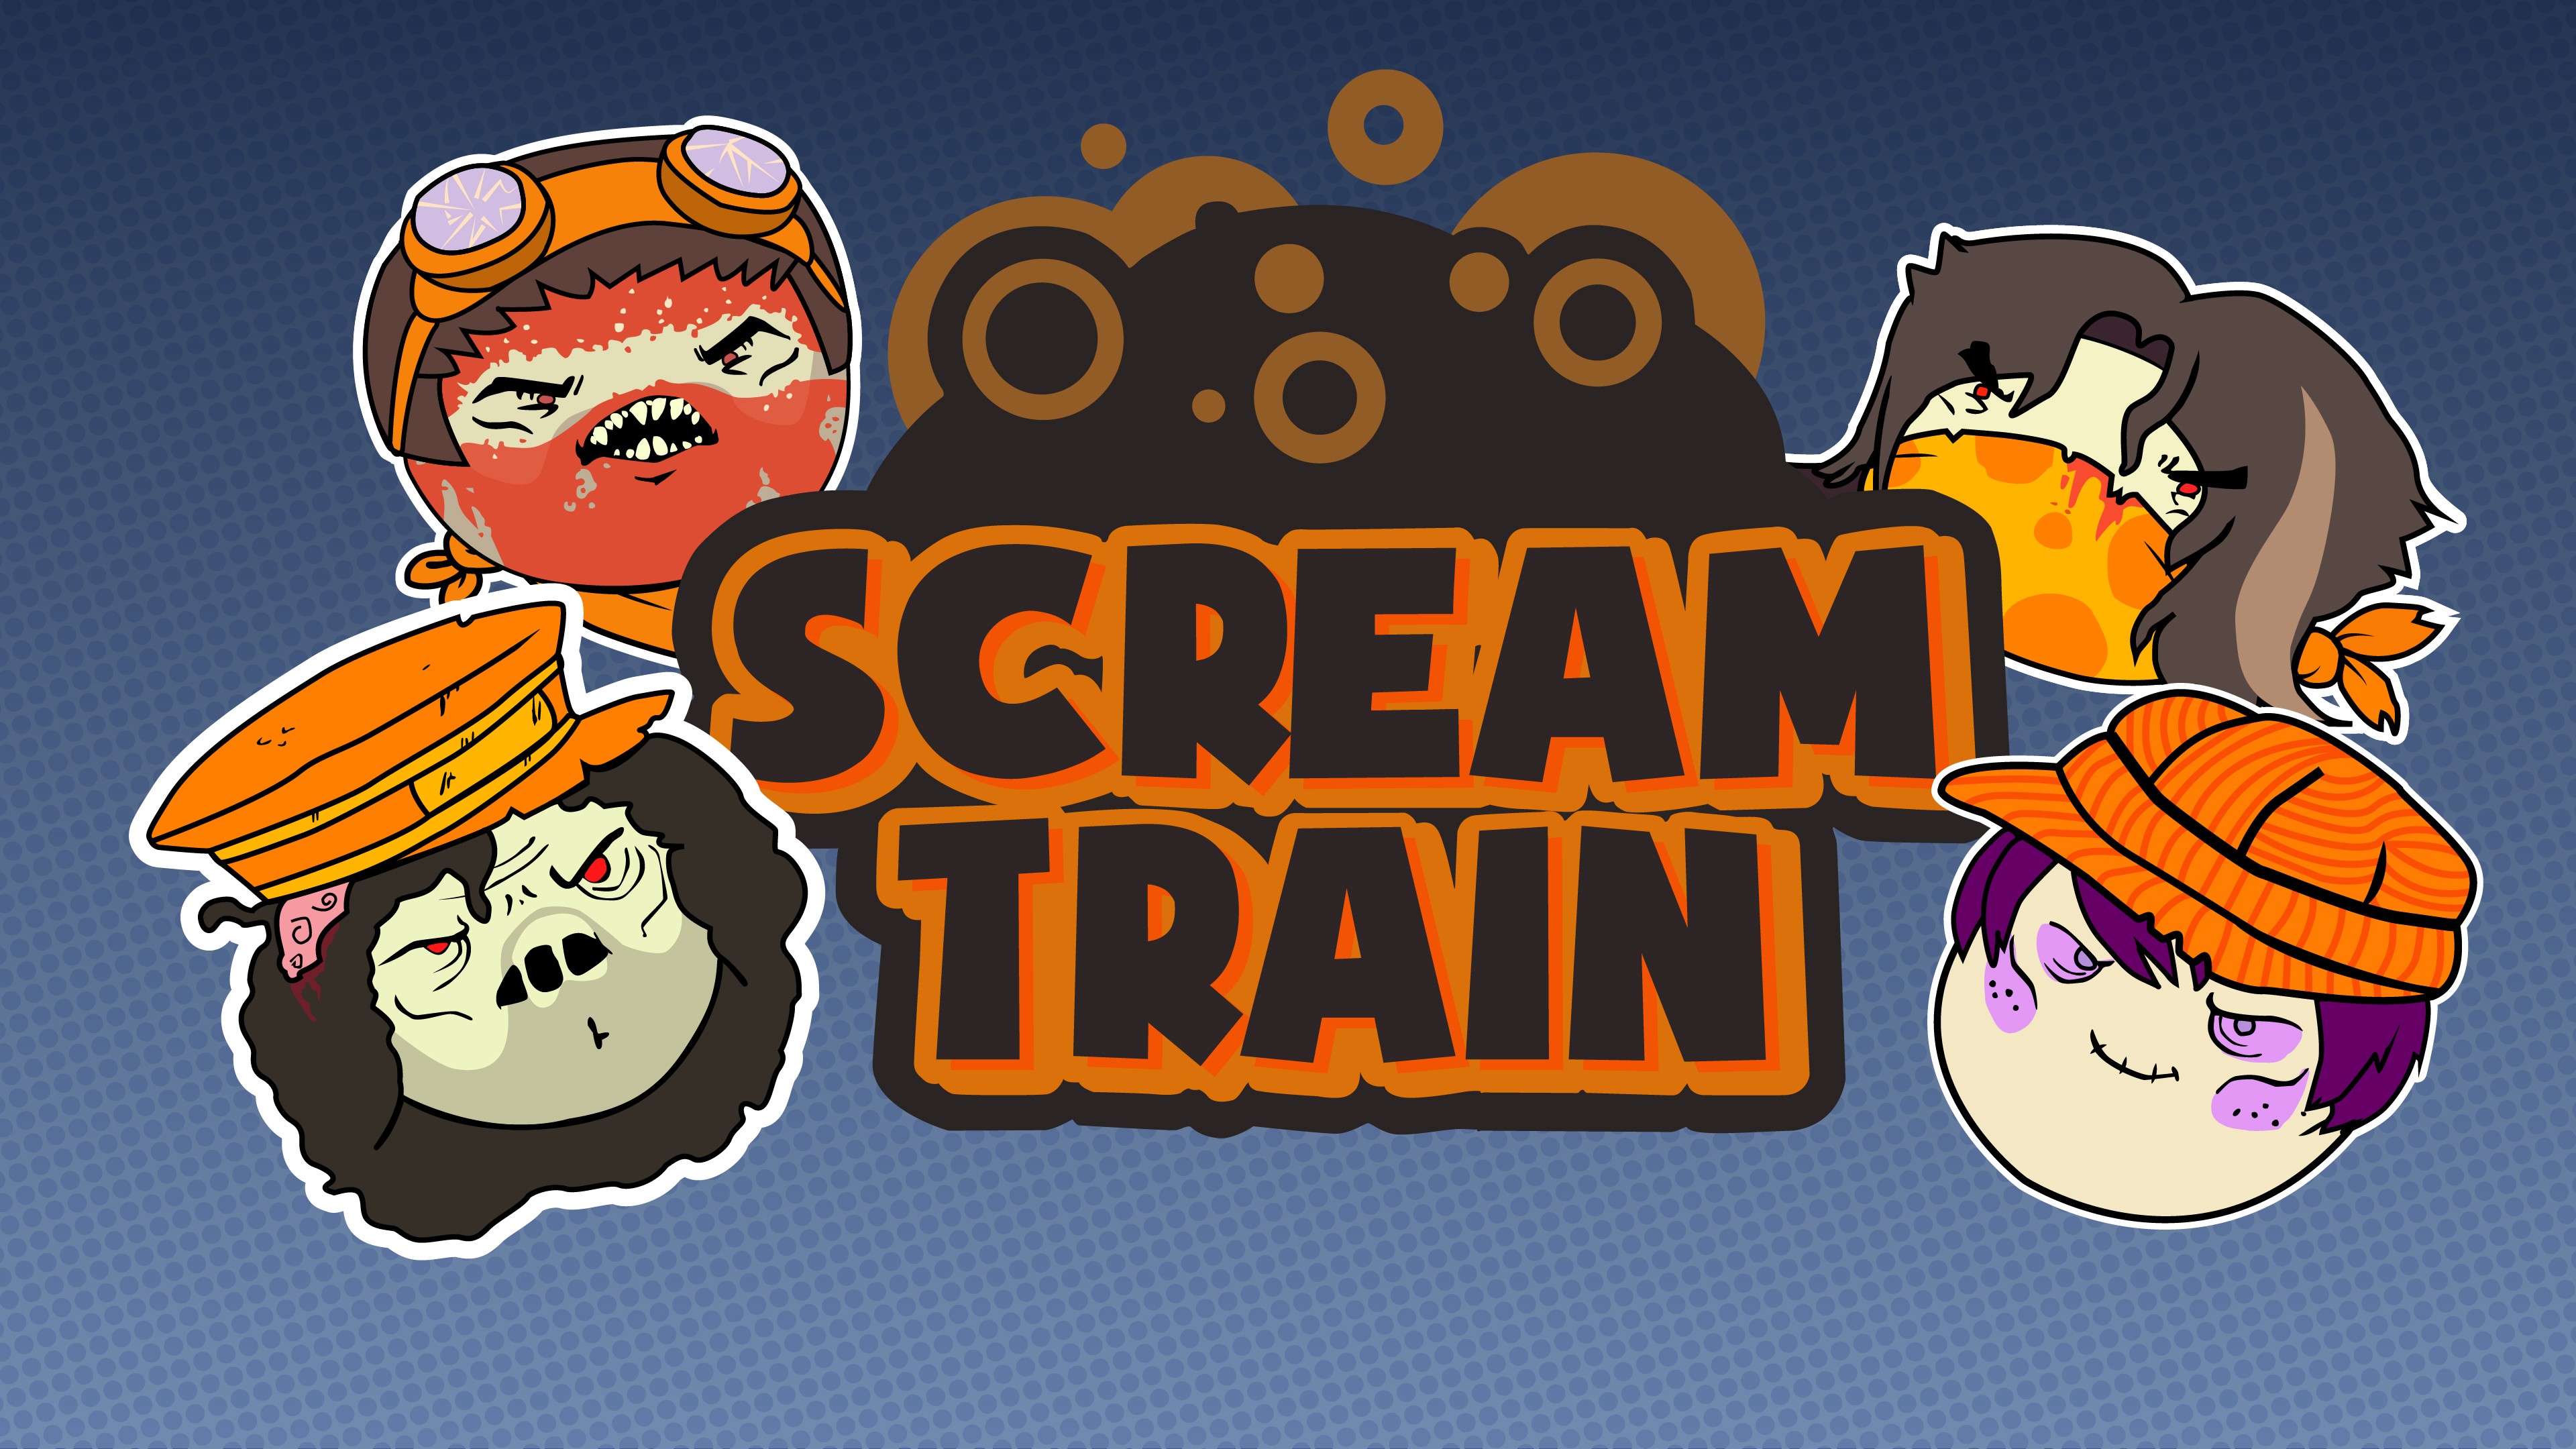 General 3840x2160 Game Grumps Steam Train video games YouTube Halloween